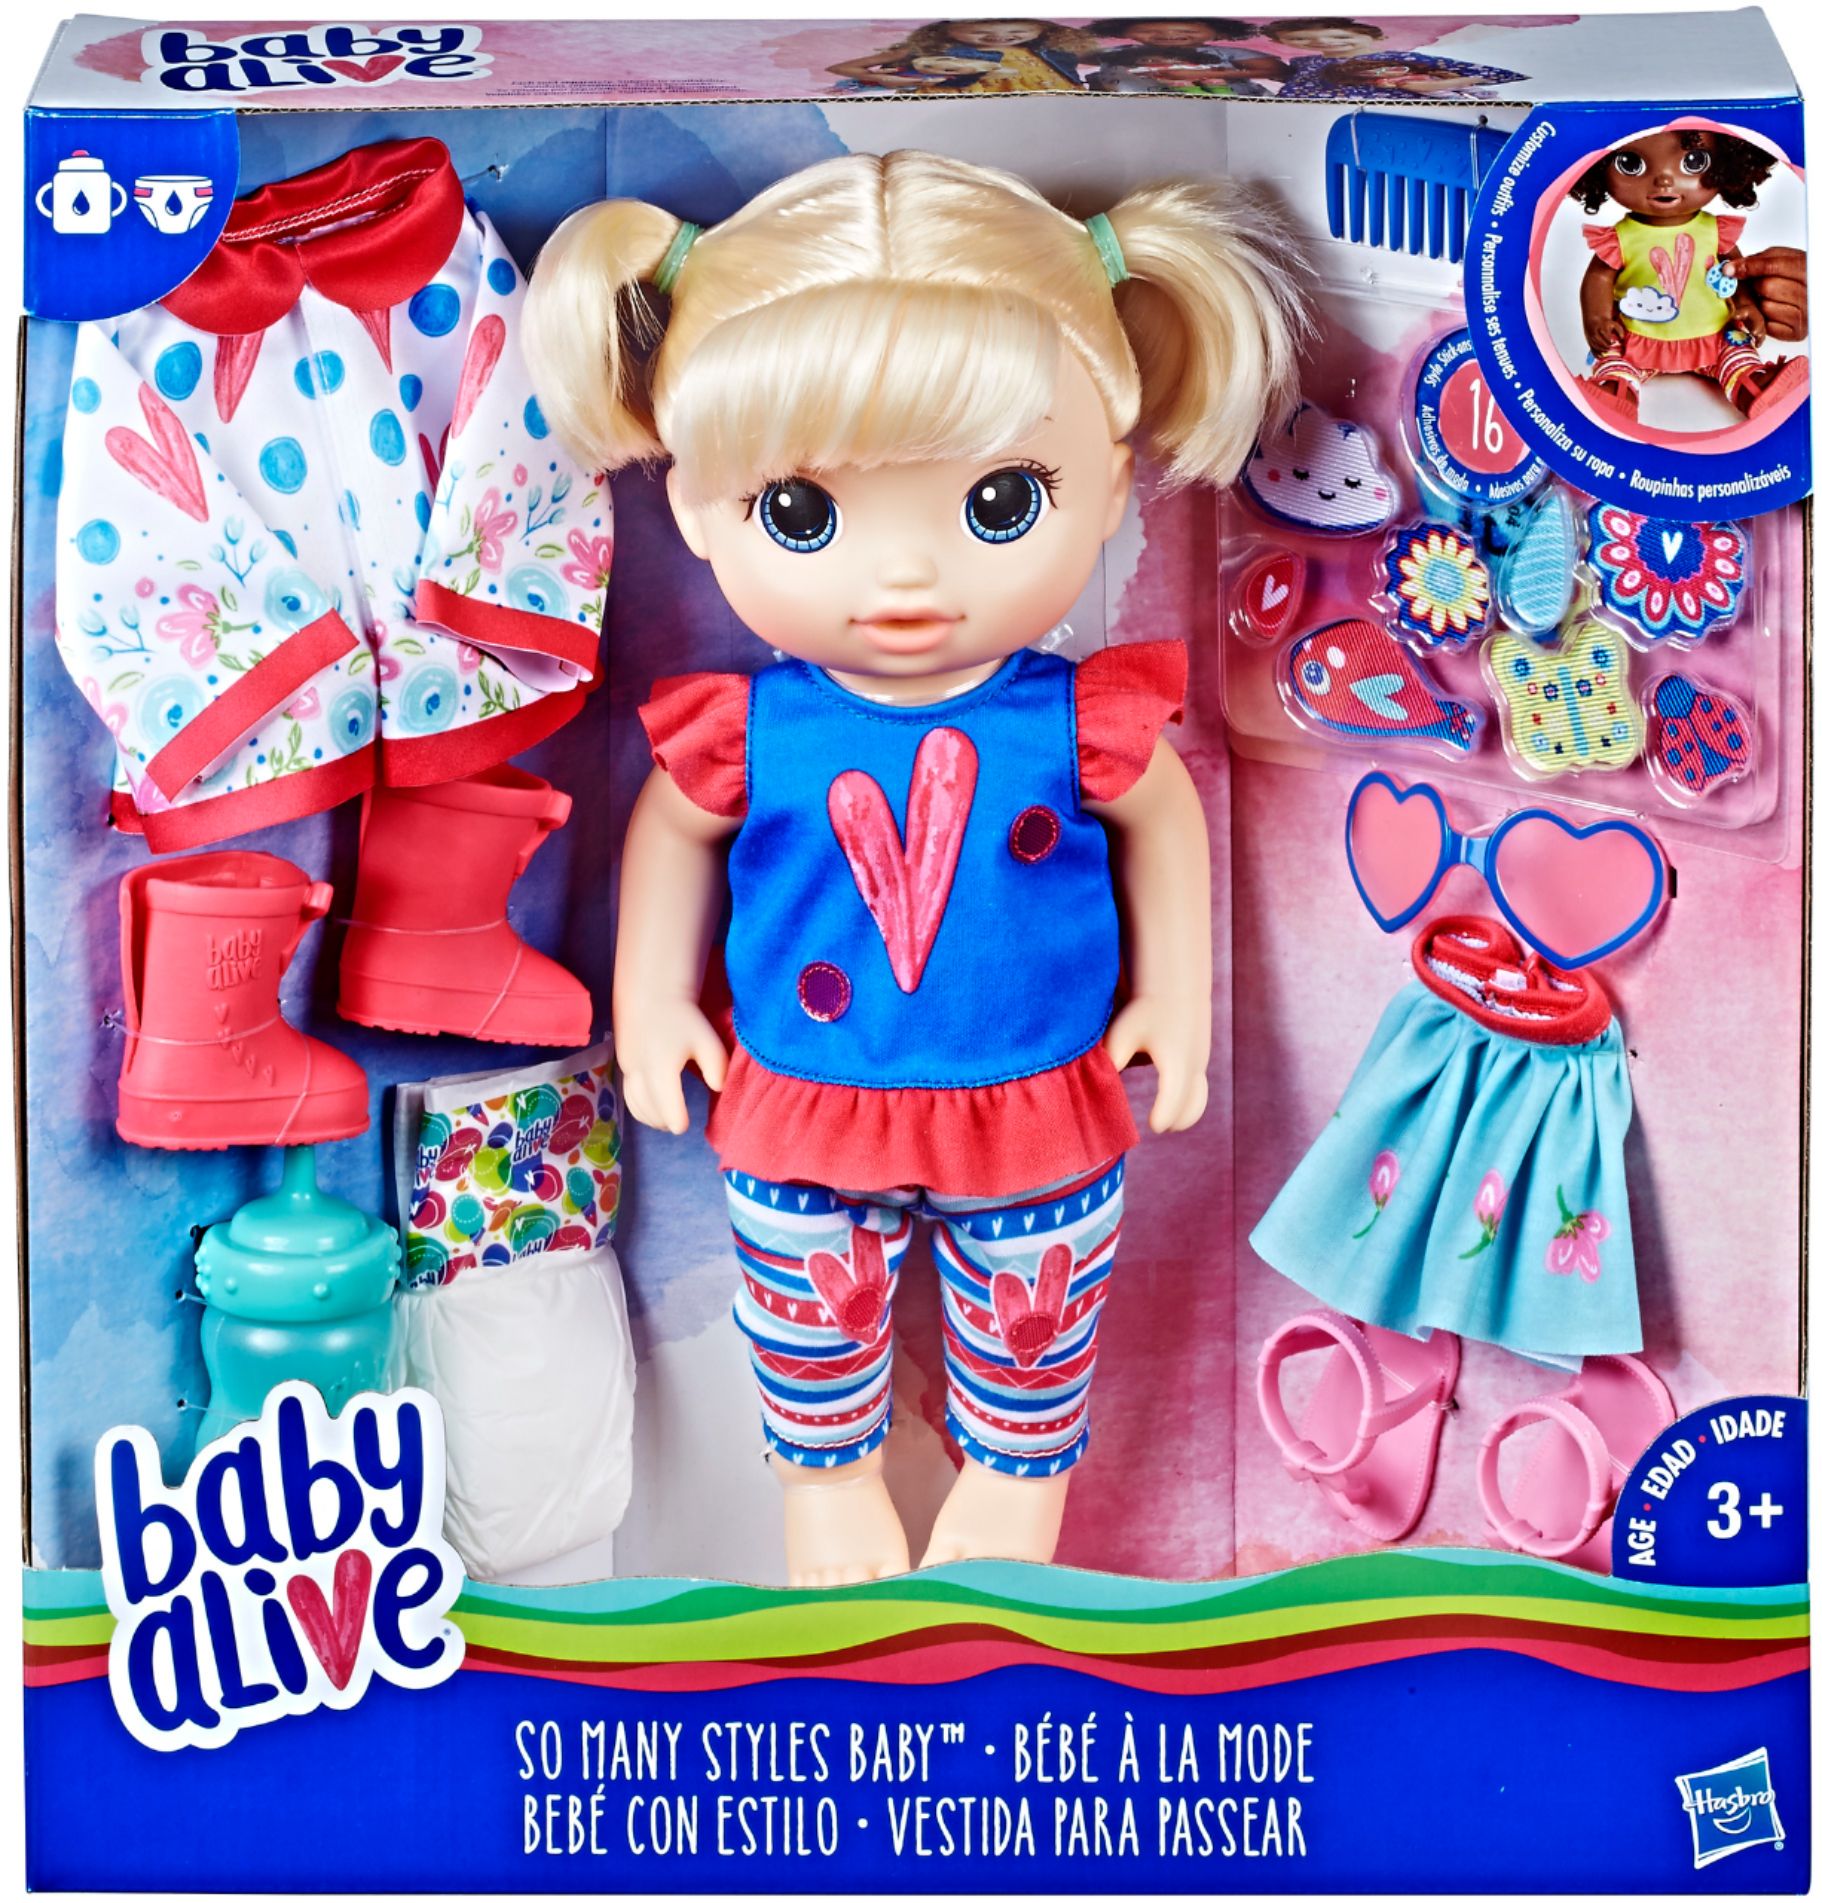 the baby alive dolls